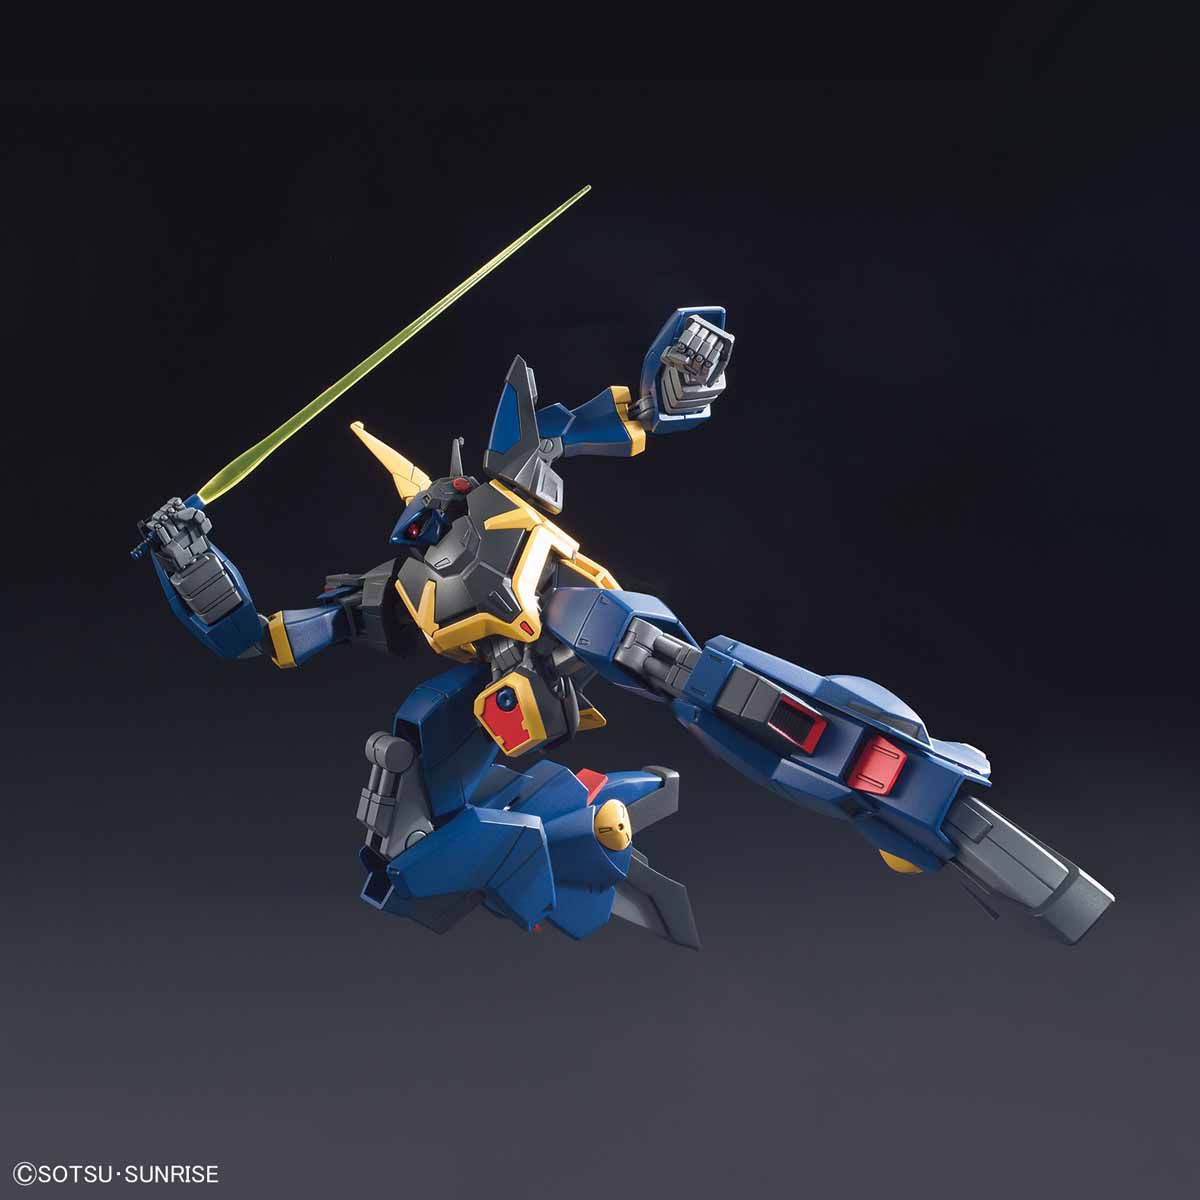 HGUC 1/144 Barzam - Mobile Suit Zeta Gundam | Glacier Hobbies